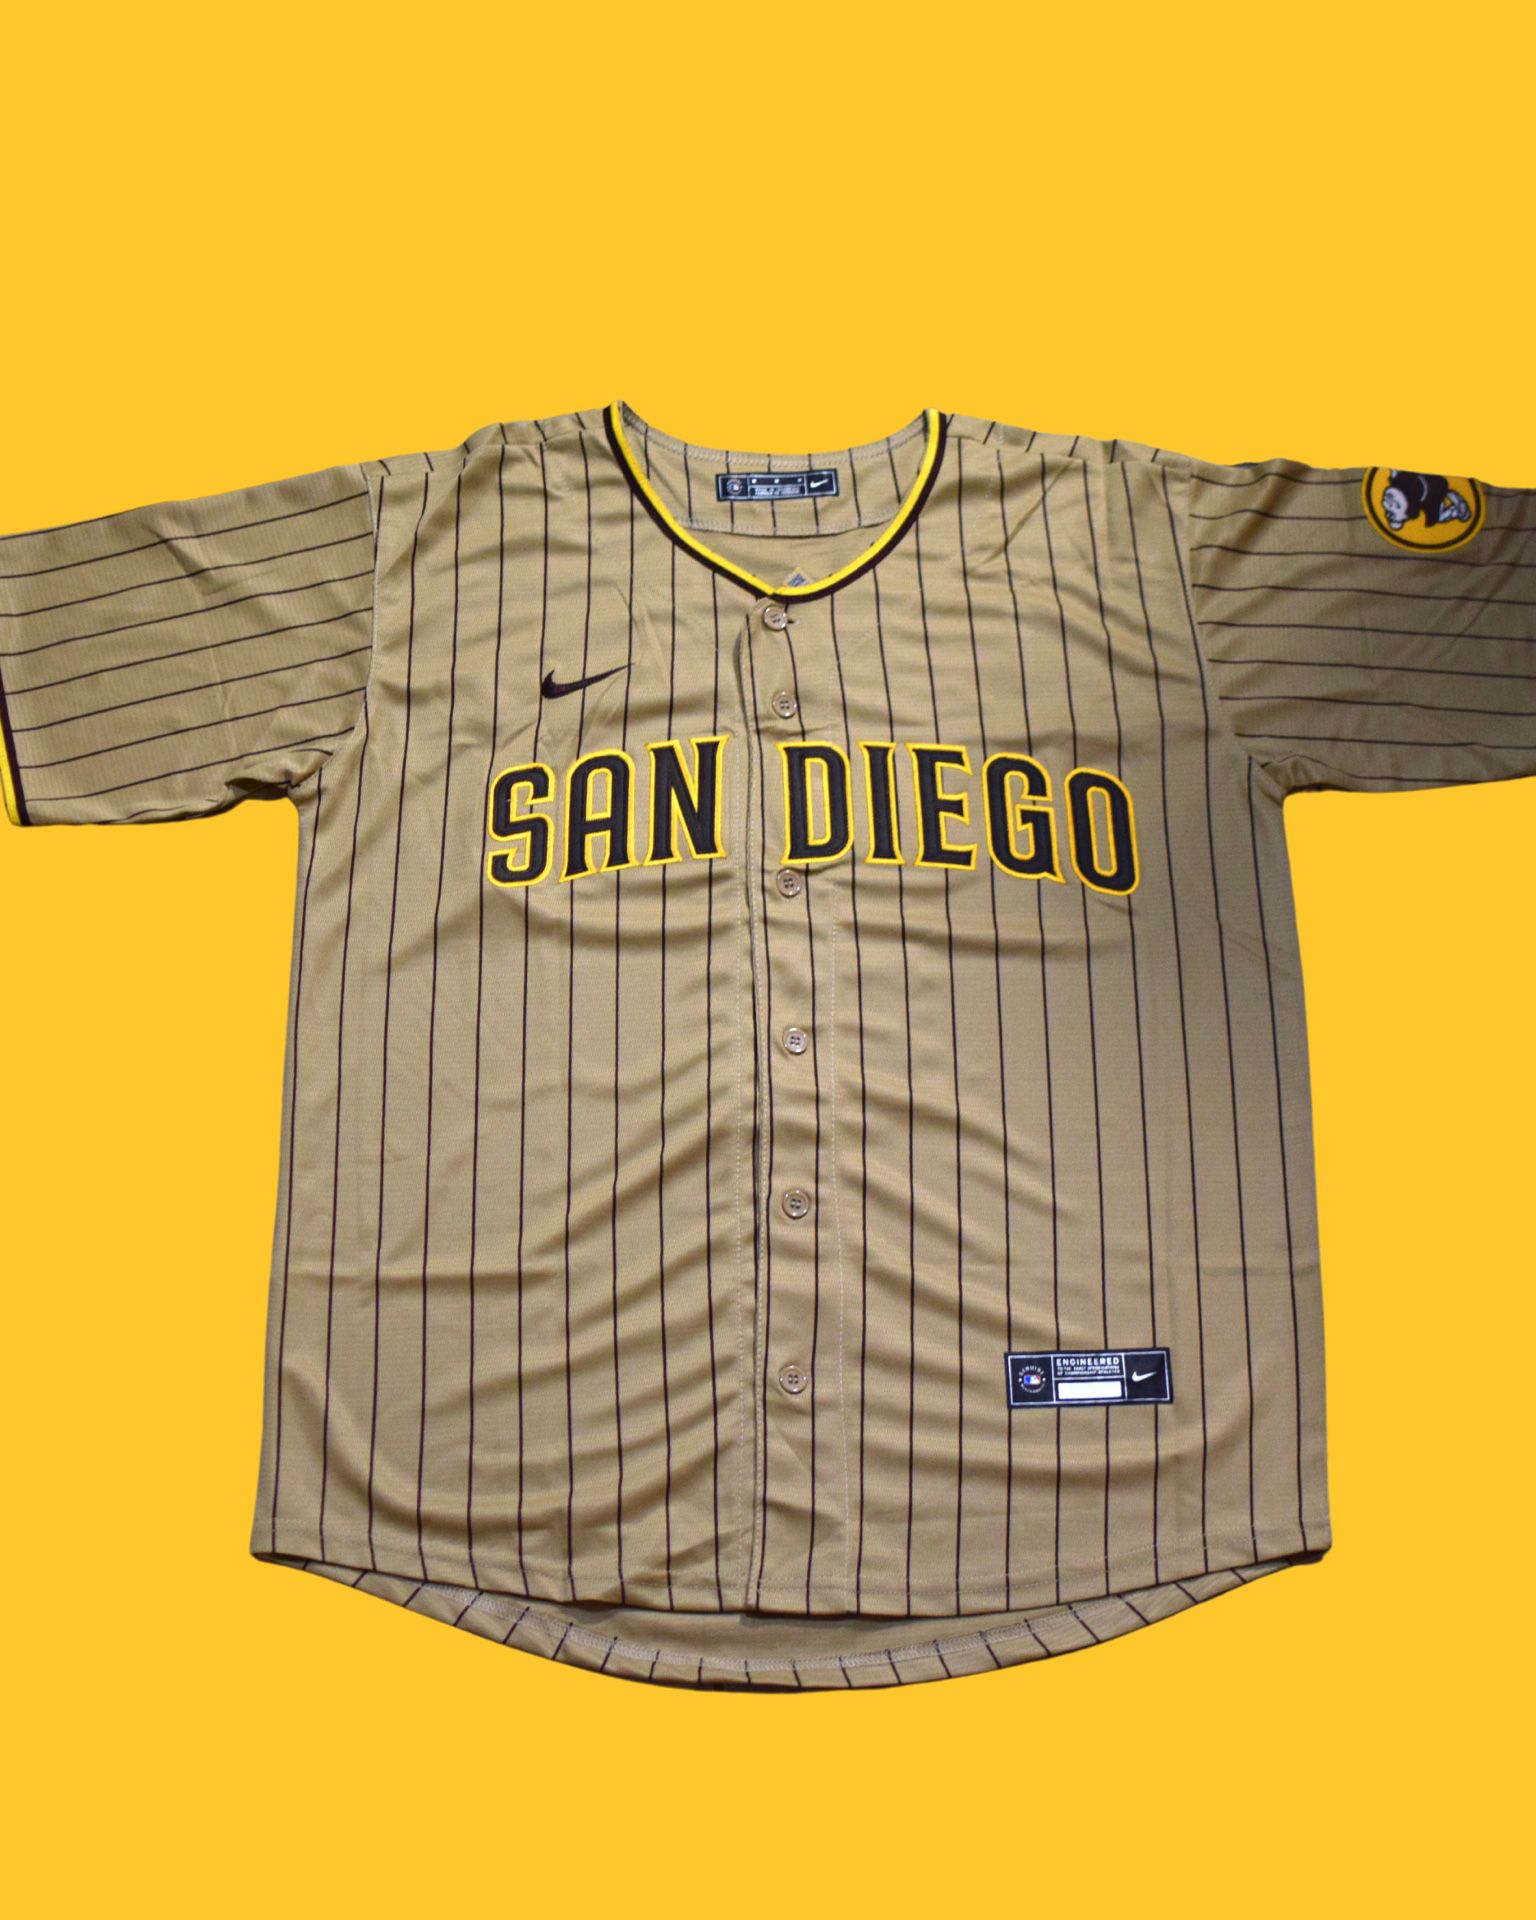 2023 Ha-Seong Kim San Diego Padres Tan Jersey - S/M/L/XL for